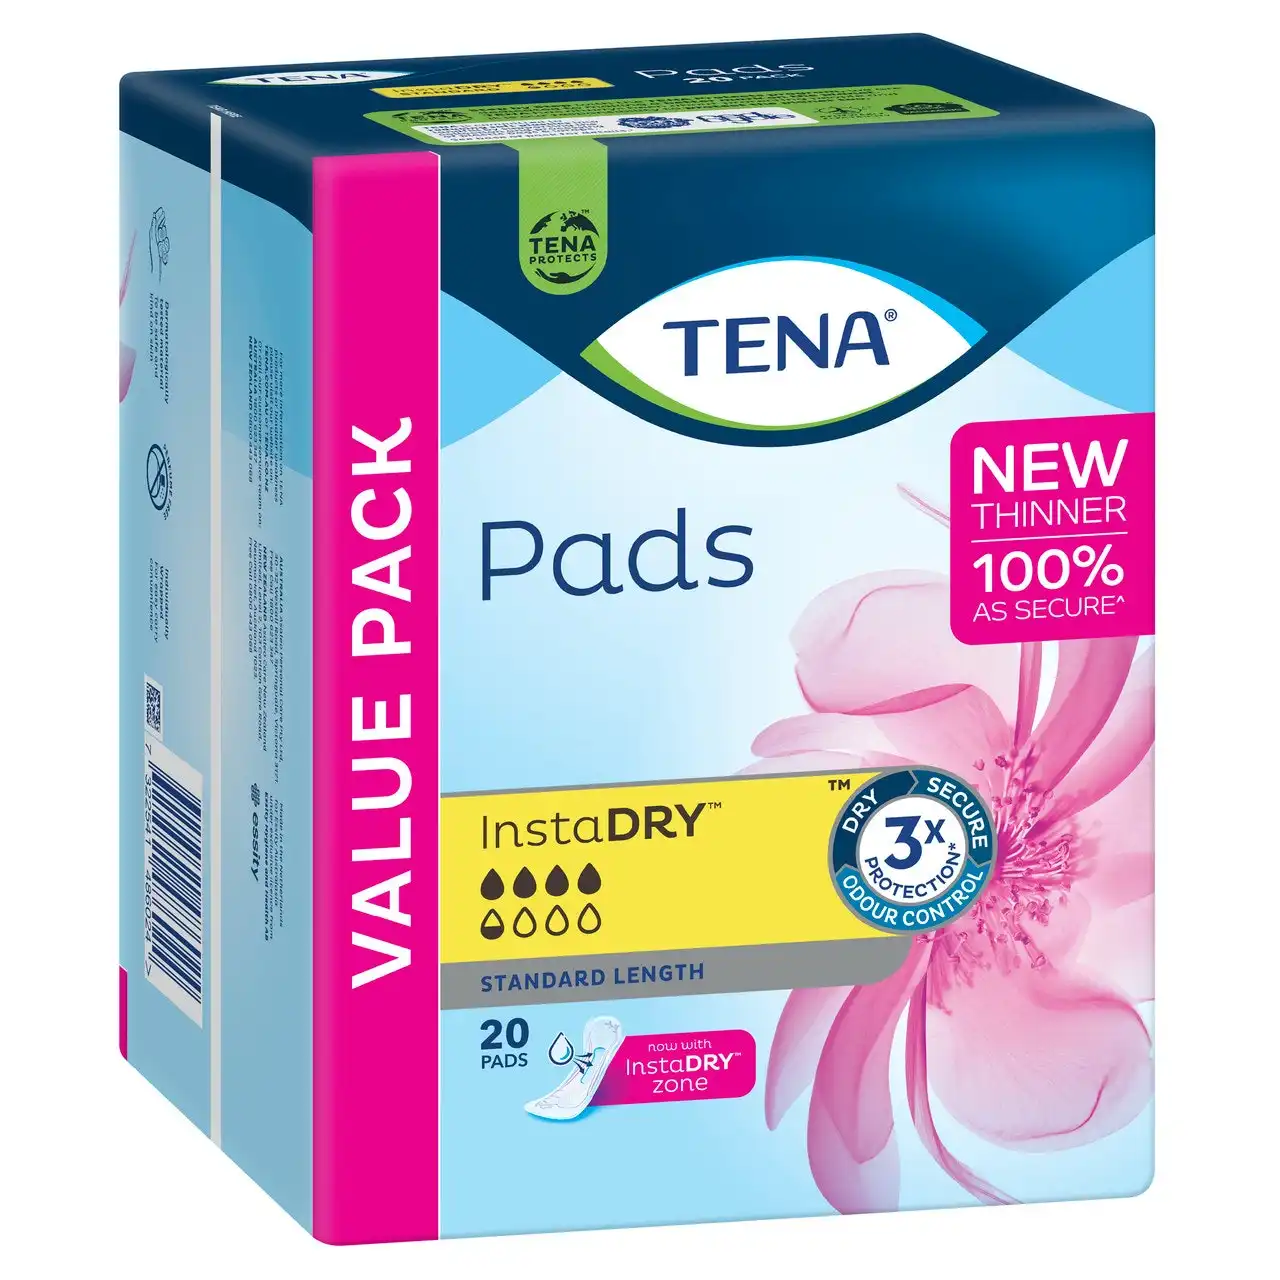 TENA Pads InstaDRY(TM) Standard Length 20 pack